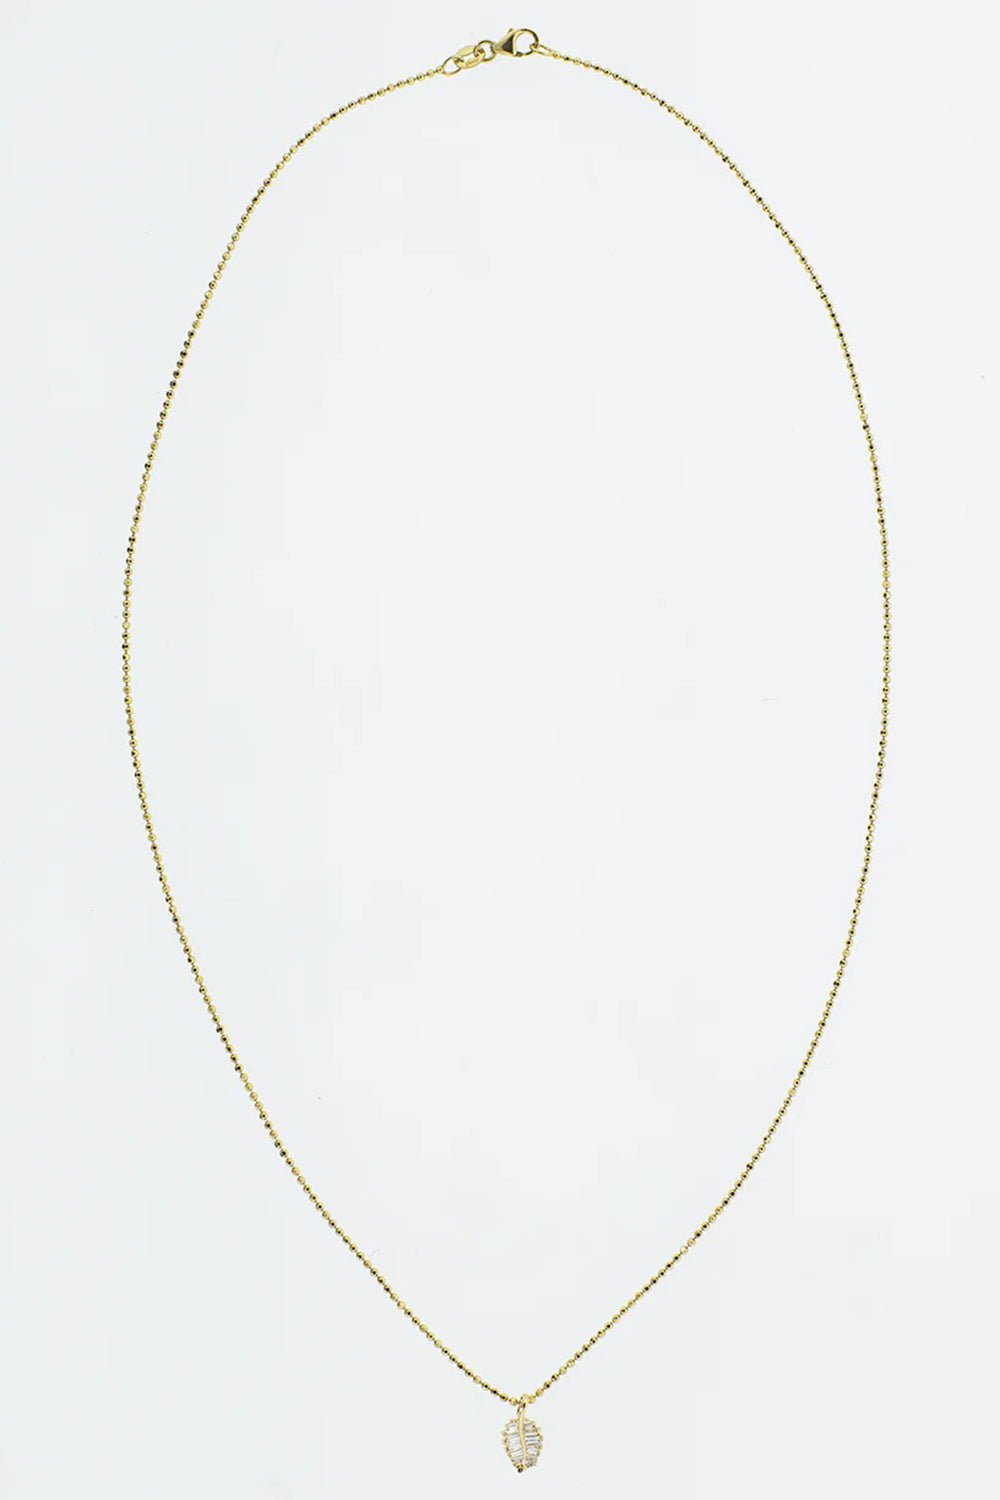 ANITA KO-Small Palm Leaf Diamond Necklace-YELLOW GOLD